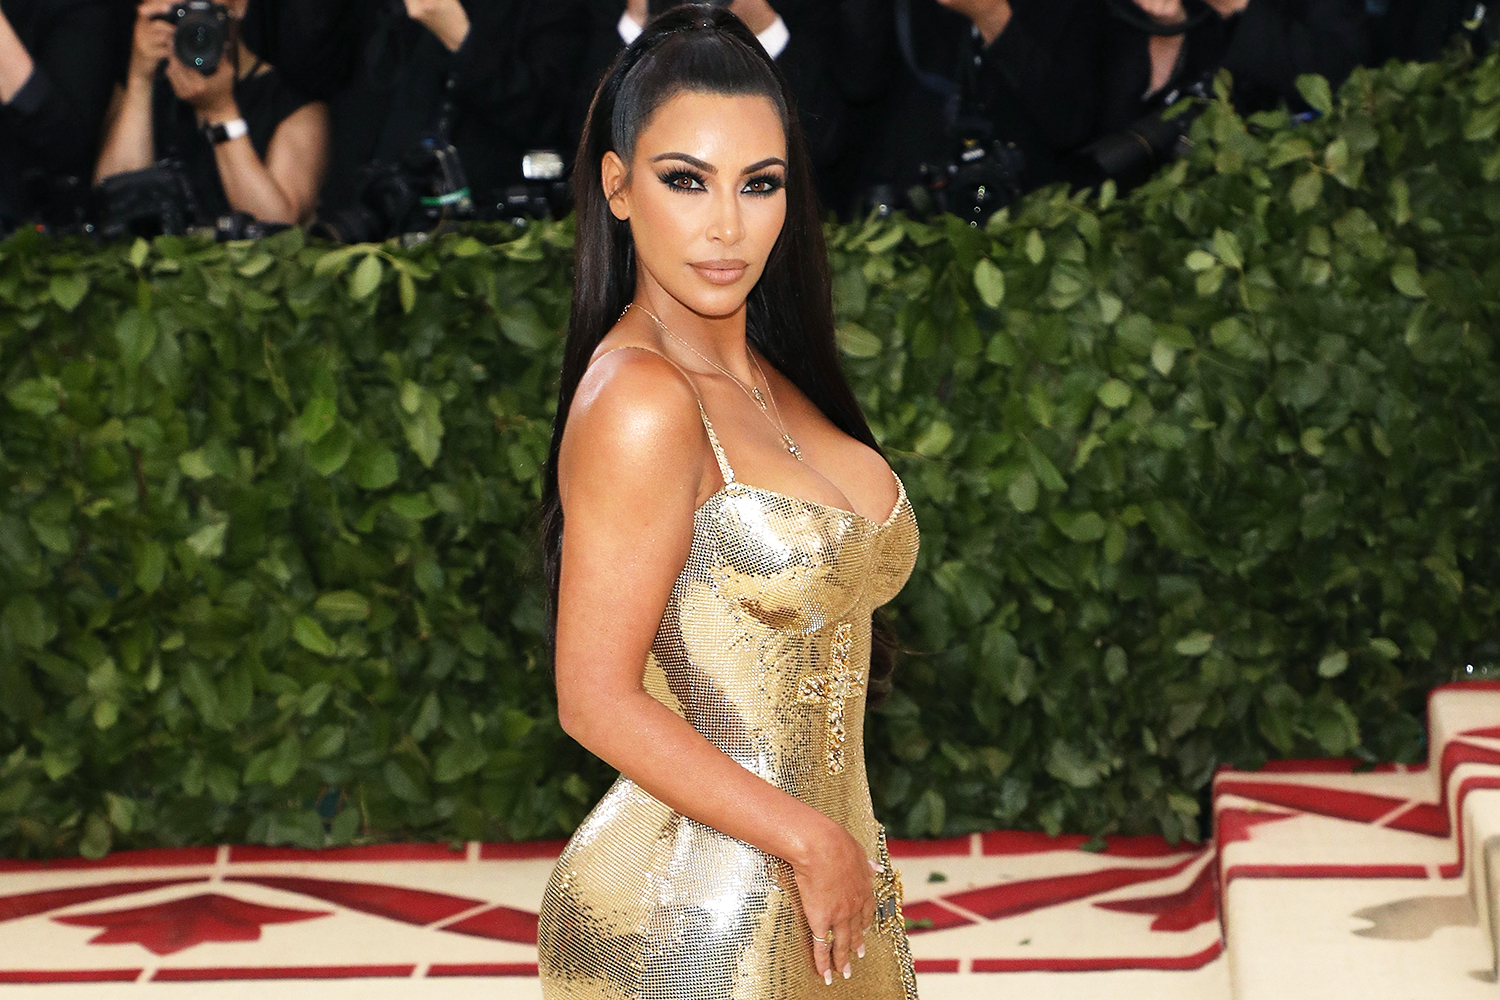 How much does Kim Kardashian weigh?